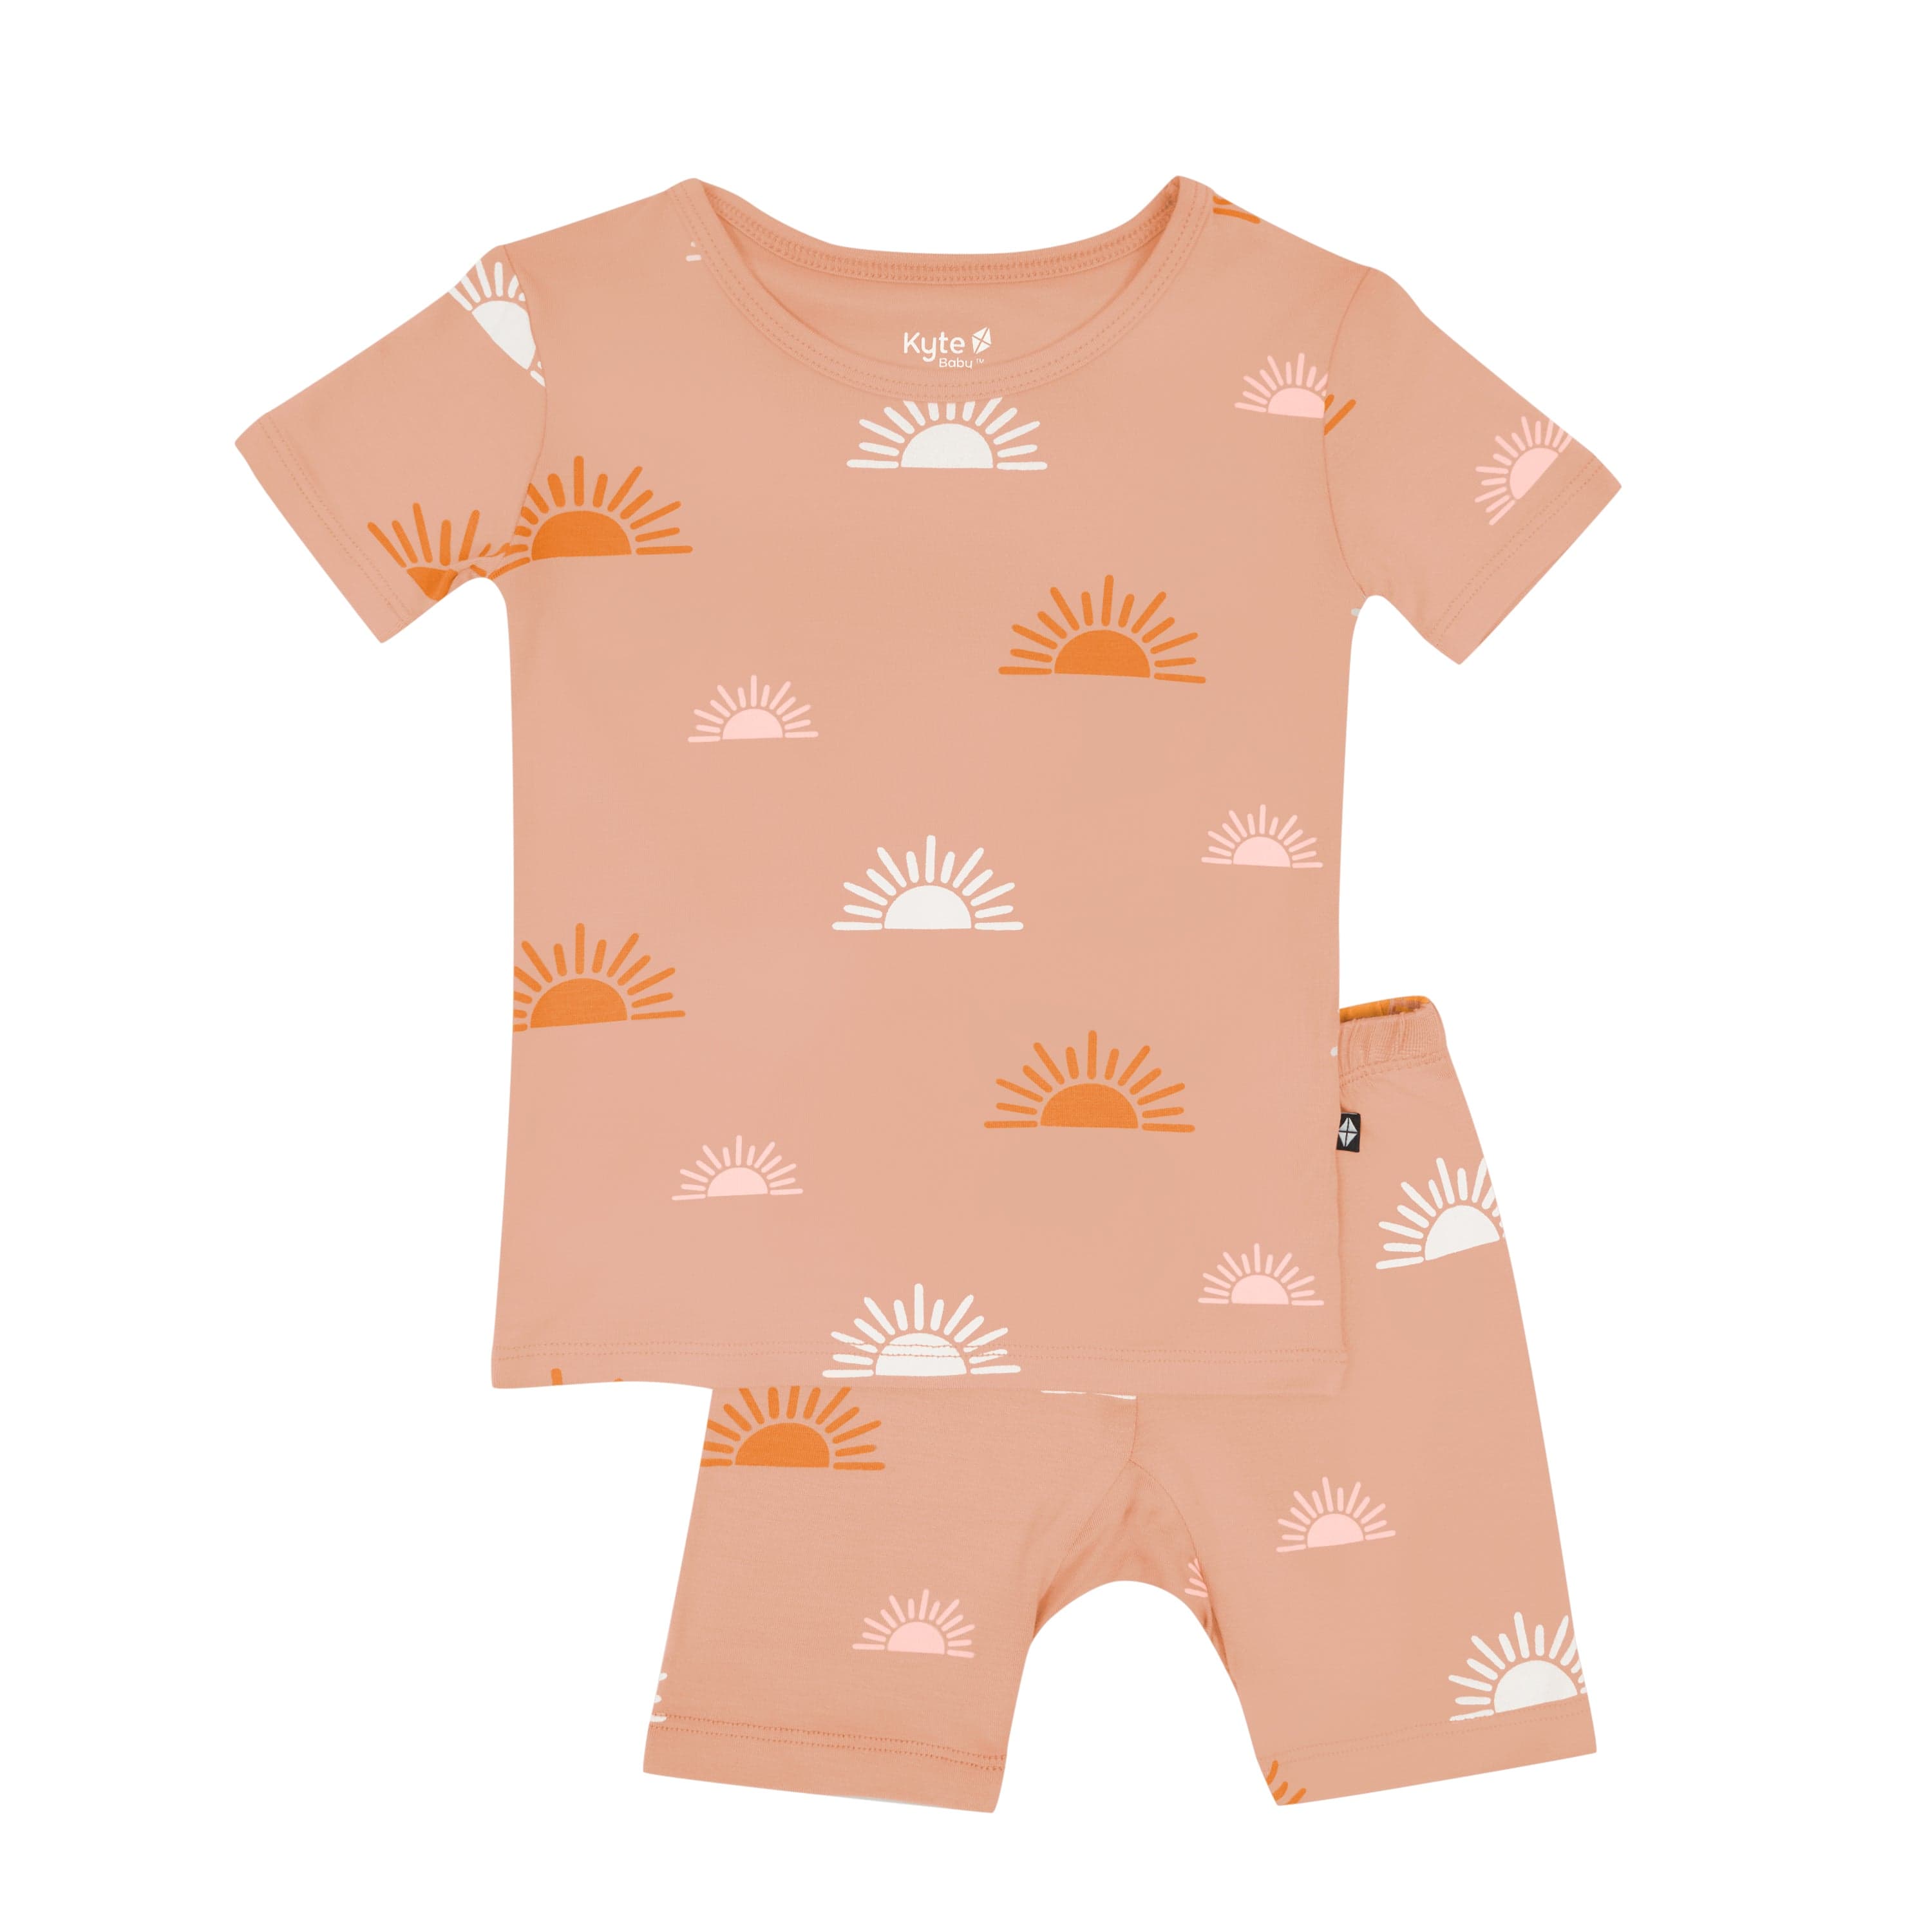 Kyte Baby Short Sleeve Toddler Pajama Set Short Sleeve Pajamas in Boho Sun